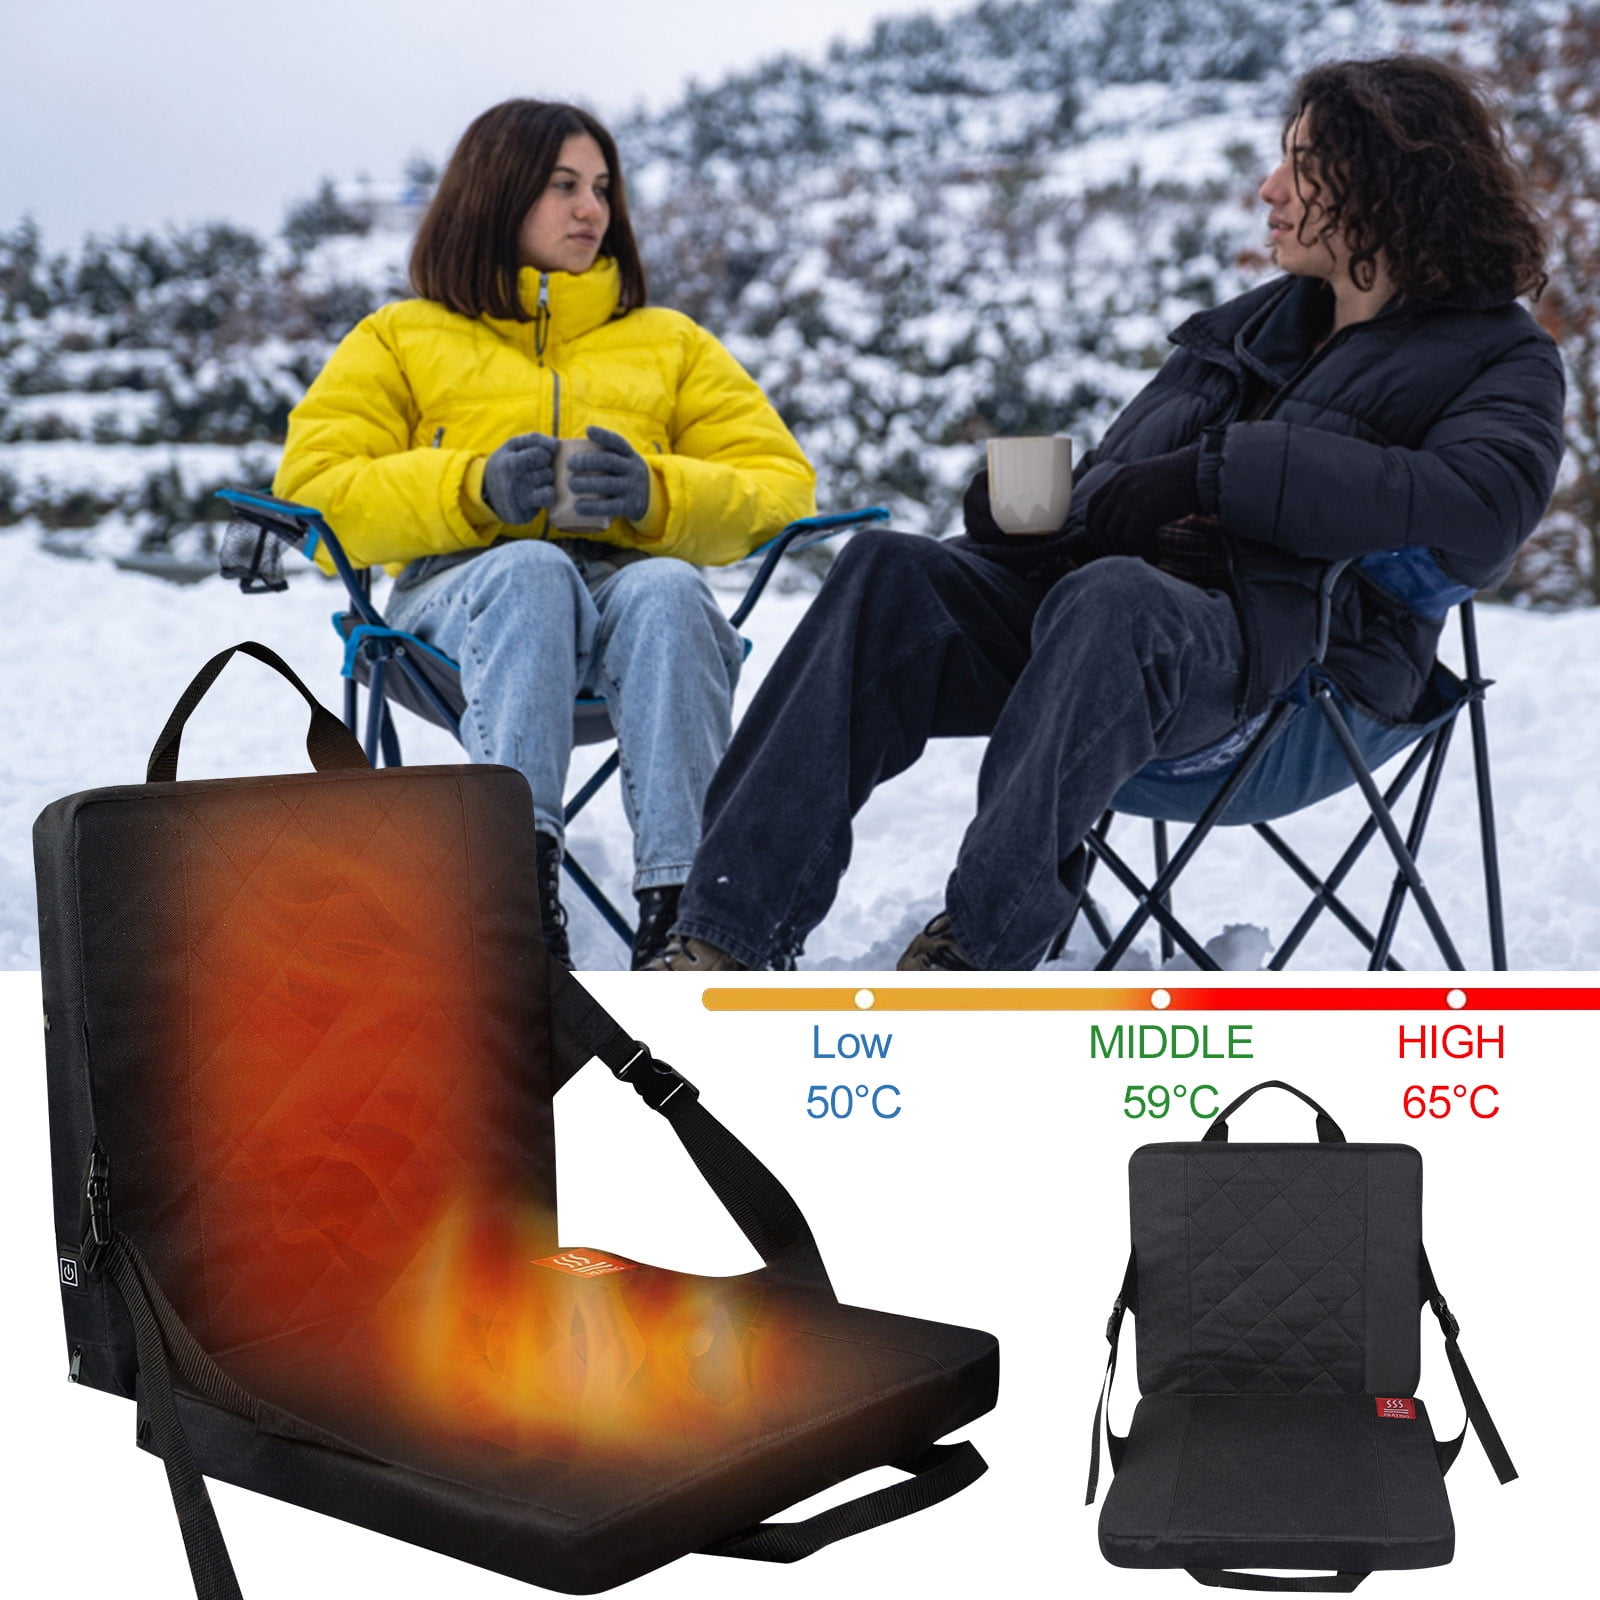 Thyle Portable Heated Seat Cushion Black Foldable Heating Cushion 3 Mode  Adjustable Heated Chair Pad Stadium Chair Heated Stadium Seat for Sports